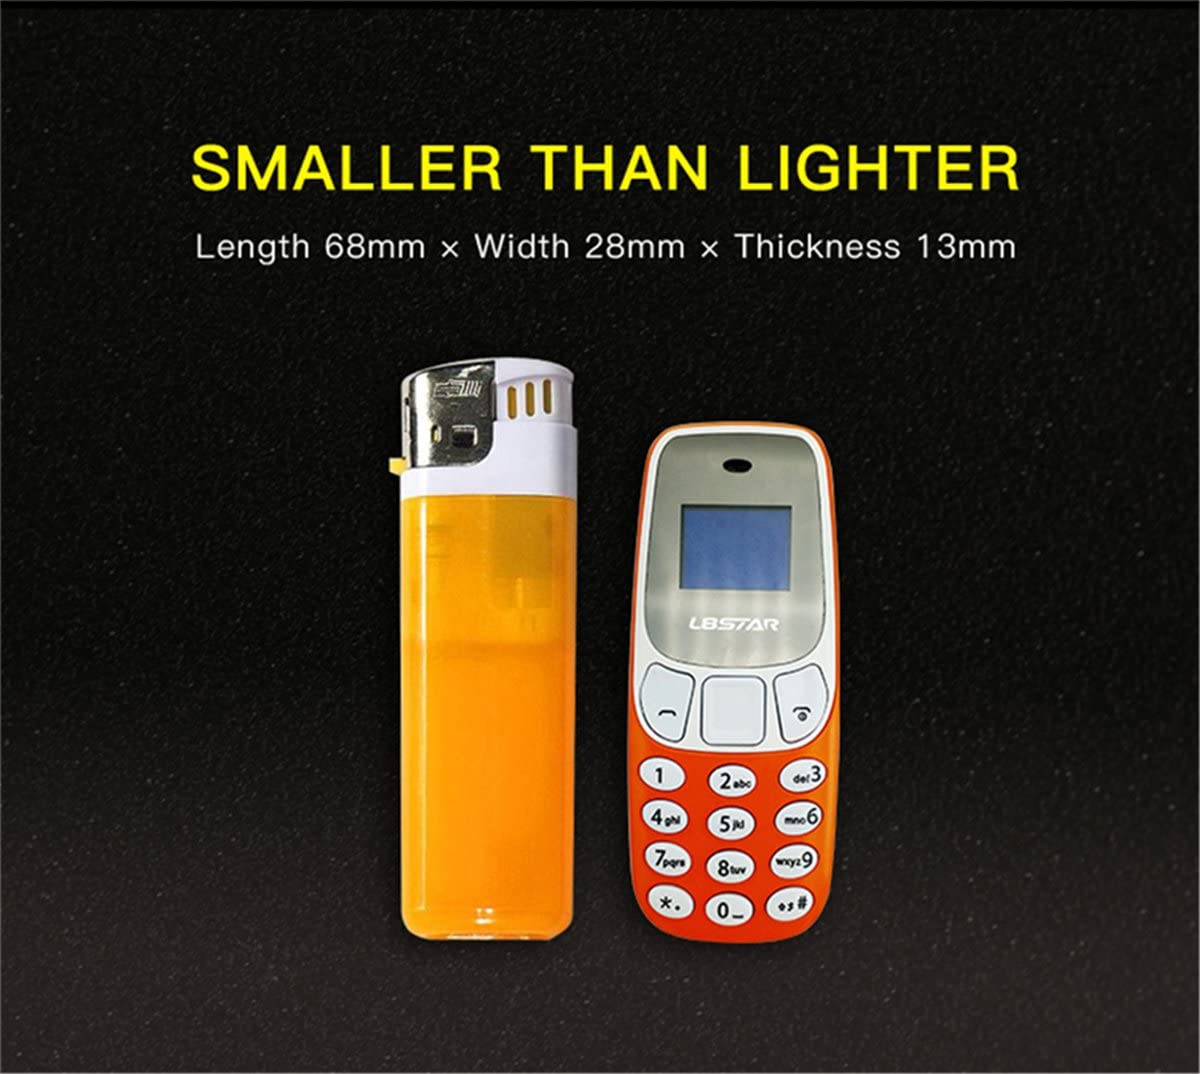 Mini Telefon Dual SIM, Dimensiune ecran 0.66 Inch, Baterie 350 mAh, Bluetooth